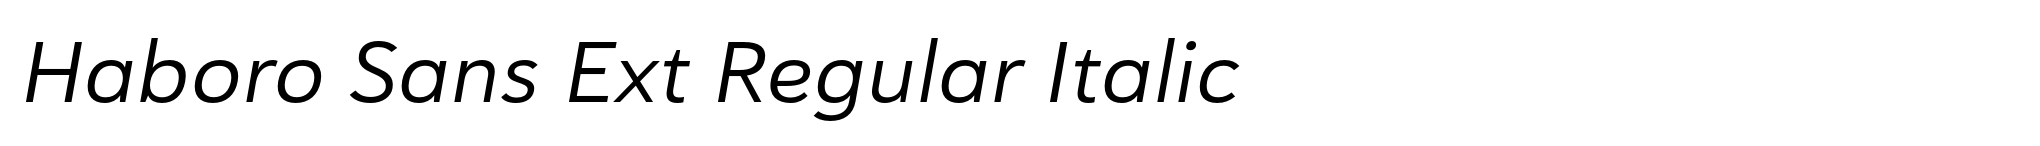 Haboro Sans Ext Regular Italic image